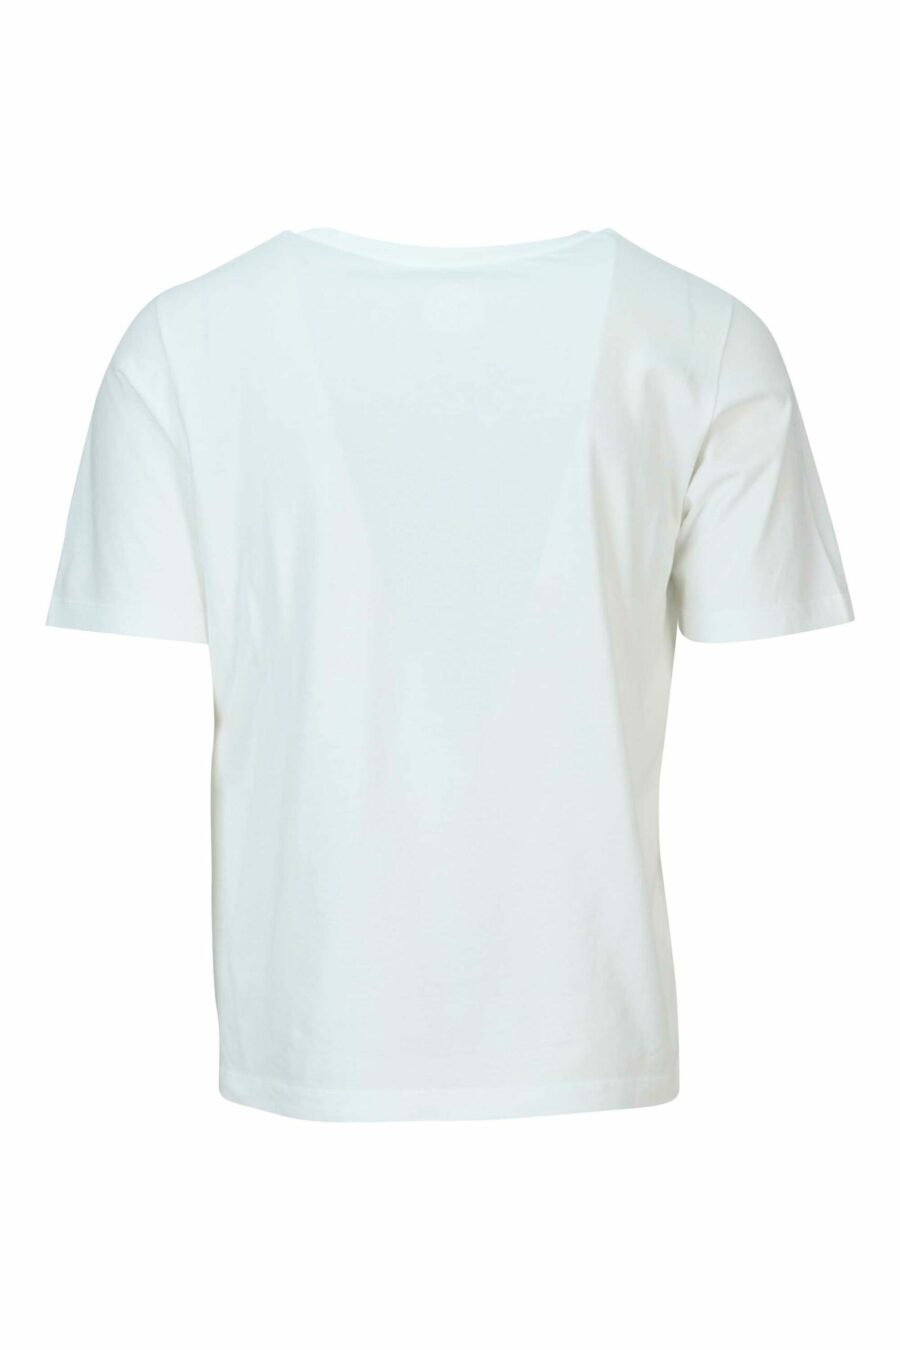 Camiseta blanca "oversize" con maxilogo lila - 8054148463342 1 scaled